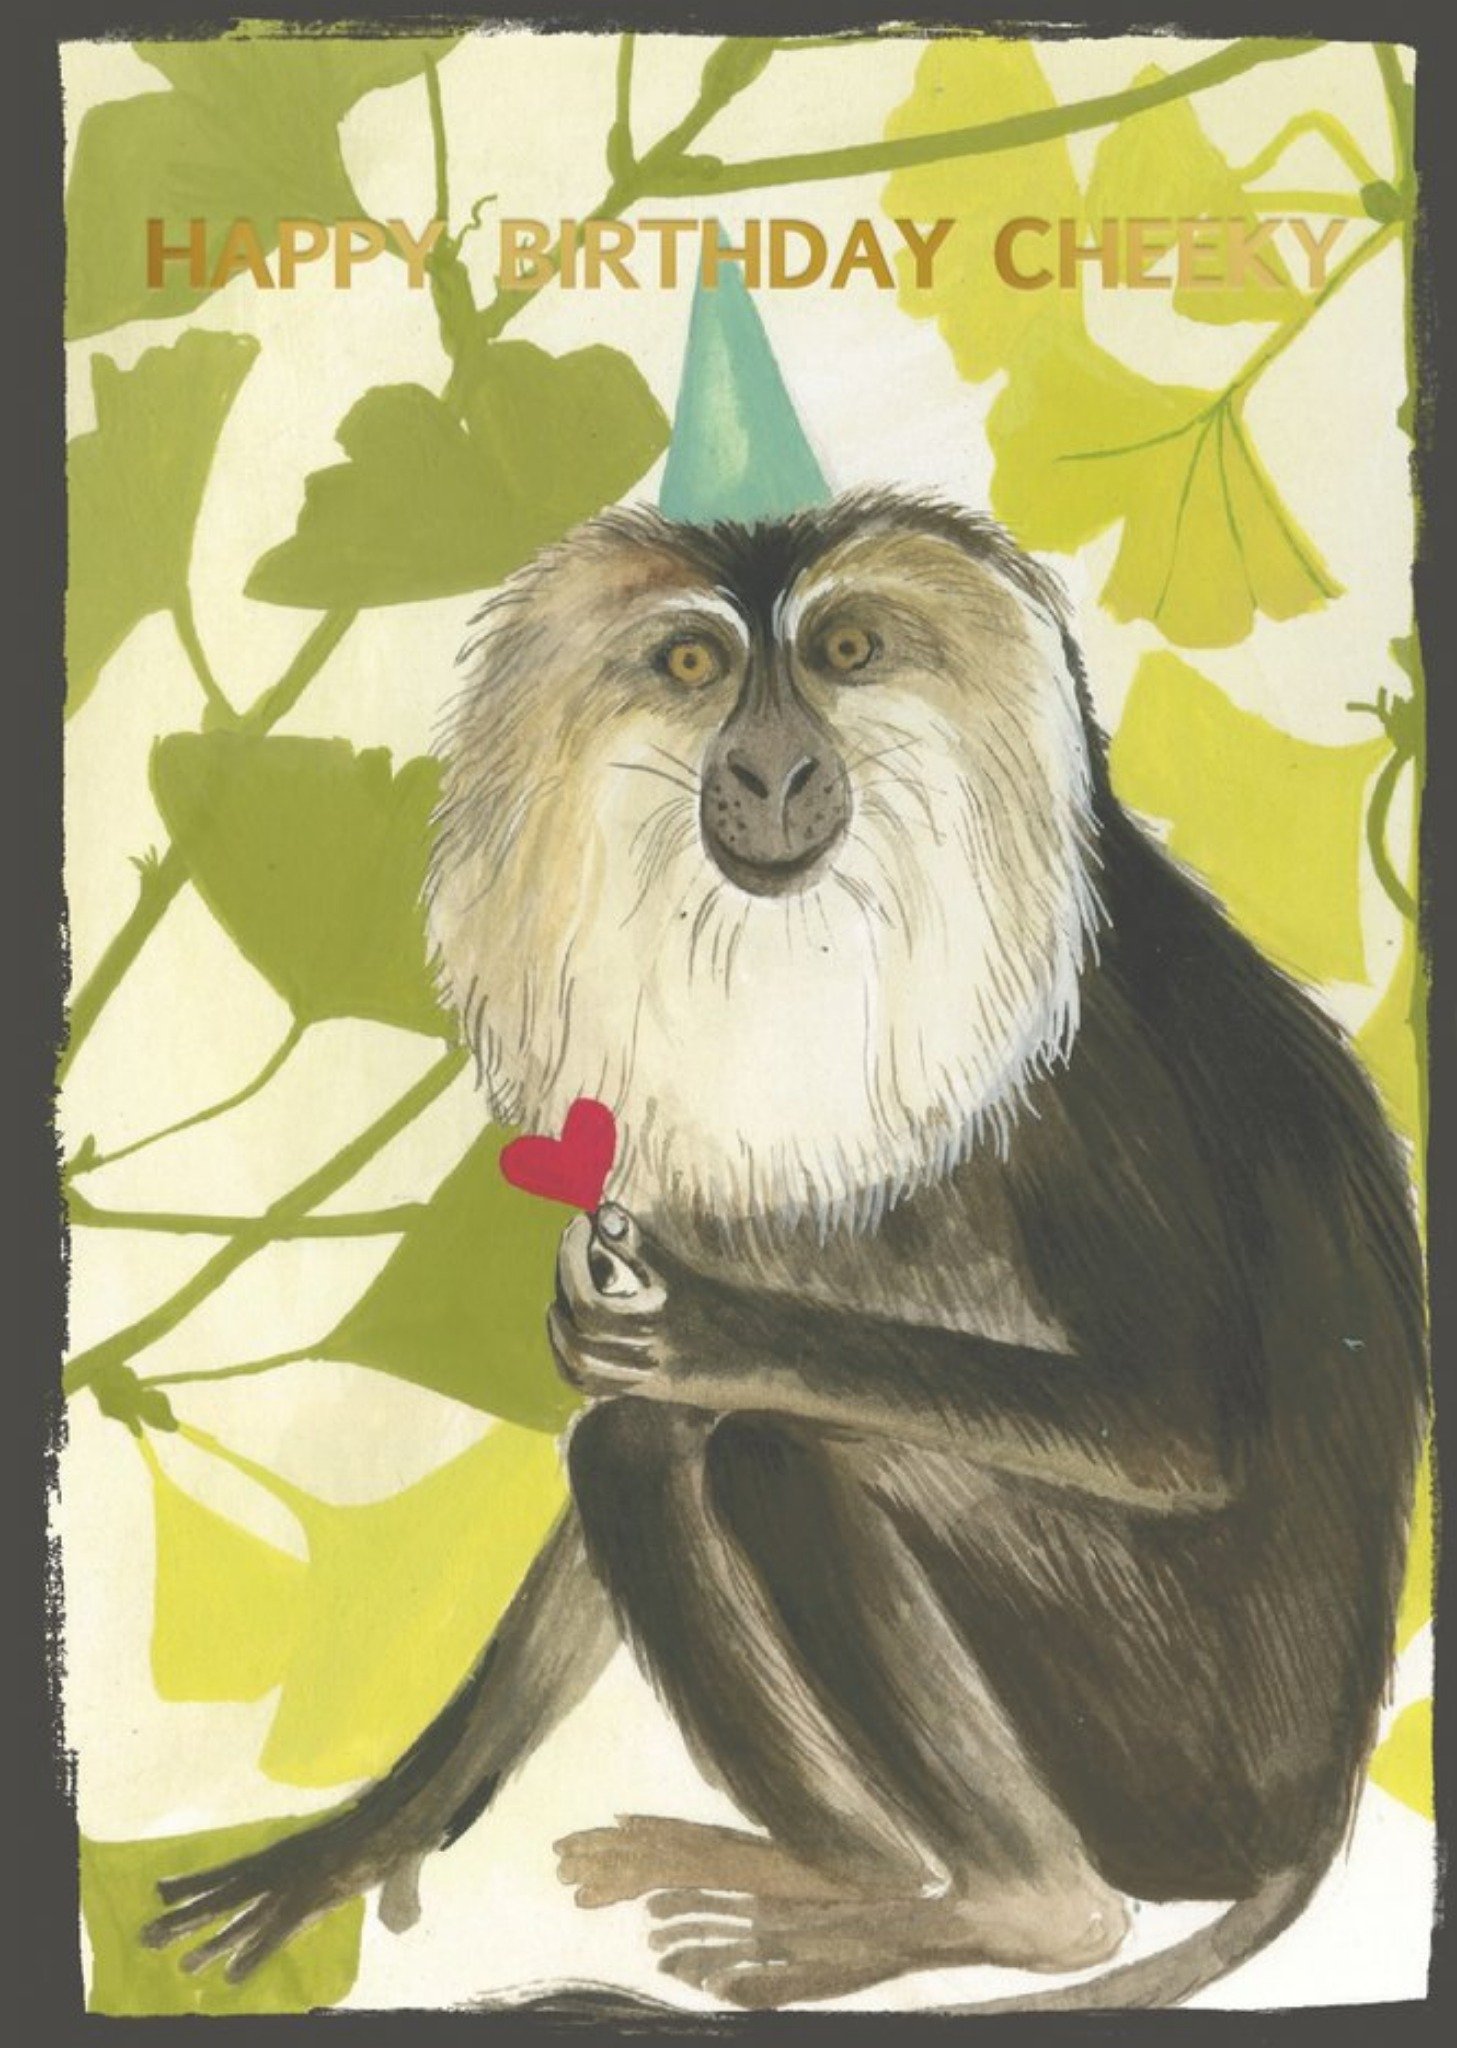 Sooshichacha Monkey Happy Birthday Cheeky Birthday Card, Large